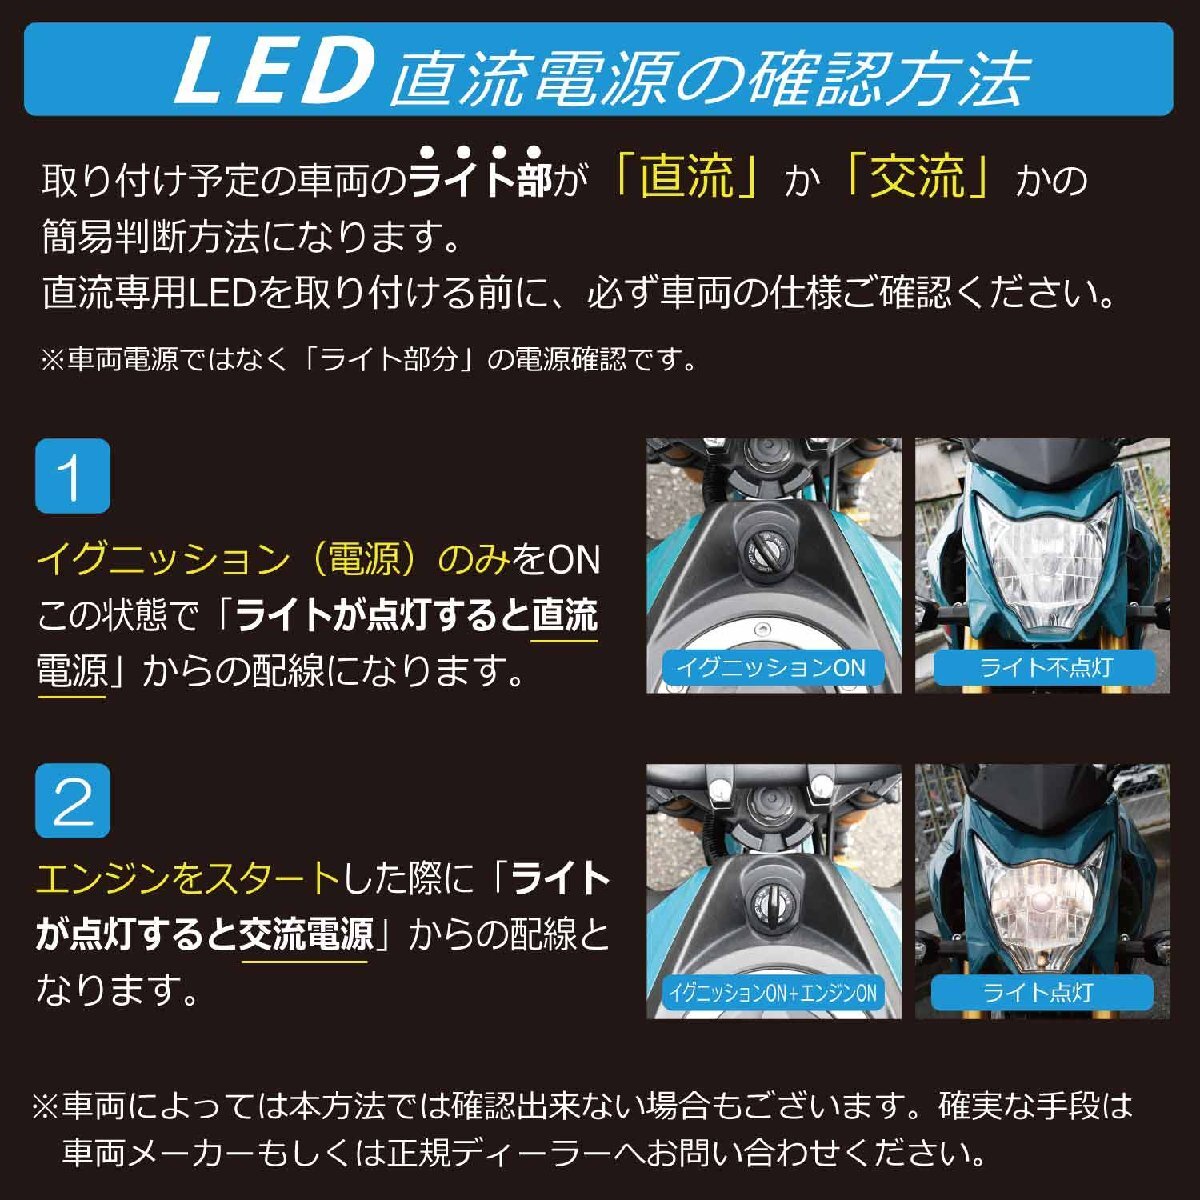 LED head light valve(bulb) PH7 T19L 50W 6000k 12V white direct current exclusive use bike two wheel height brightness 